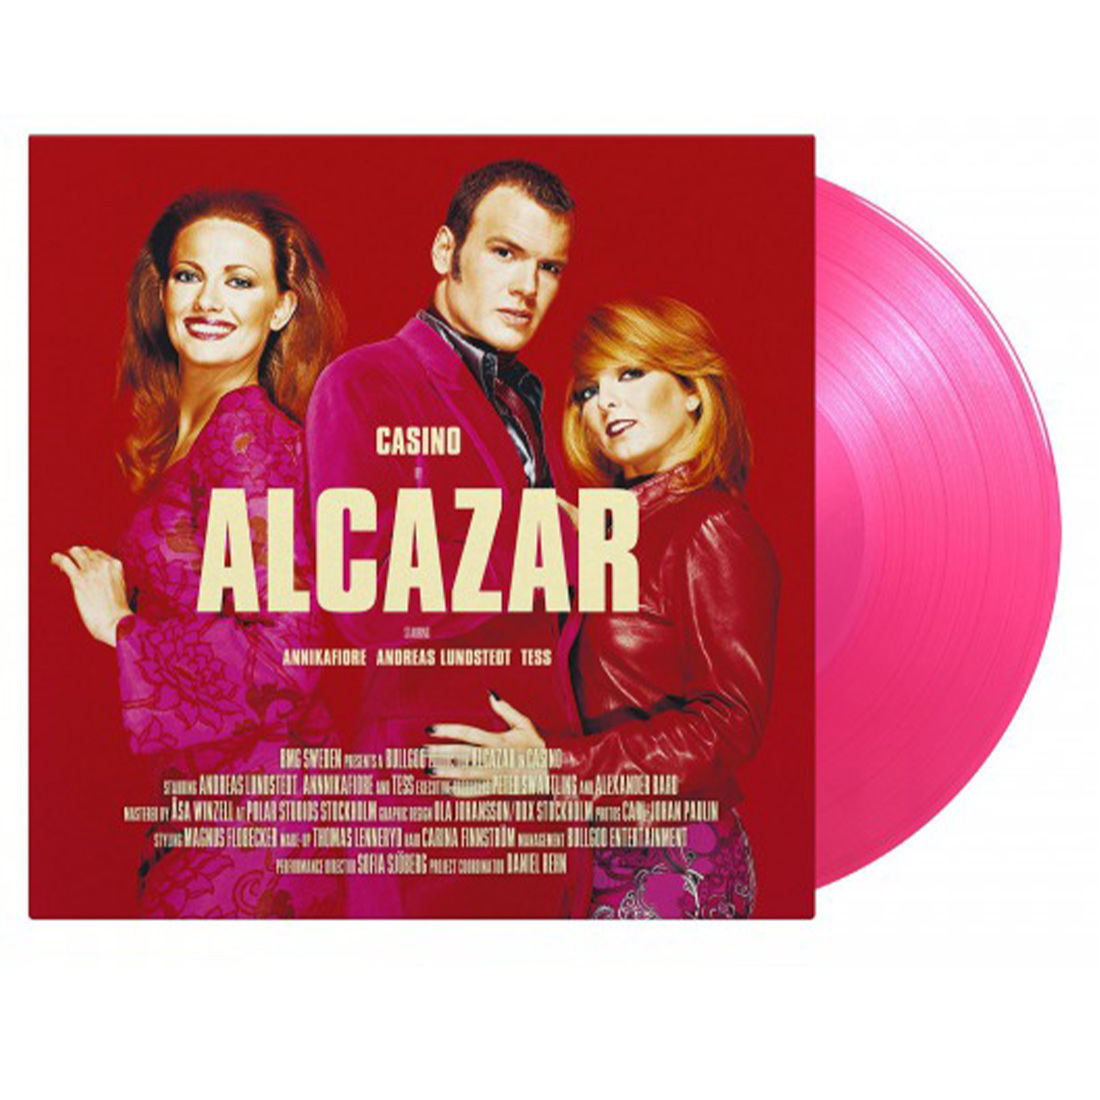 Alcazar - Casino: Limited Edition Magenta Vinyl LP 